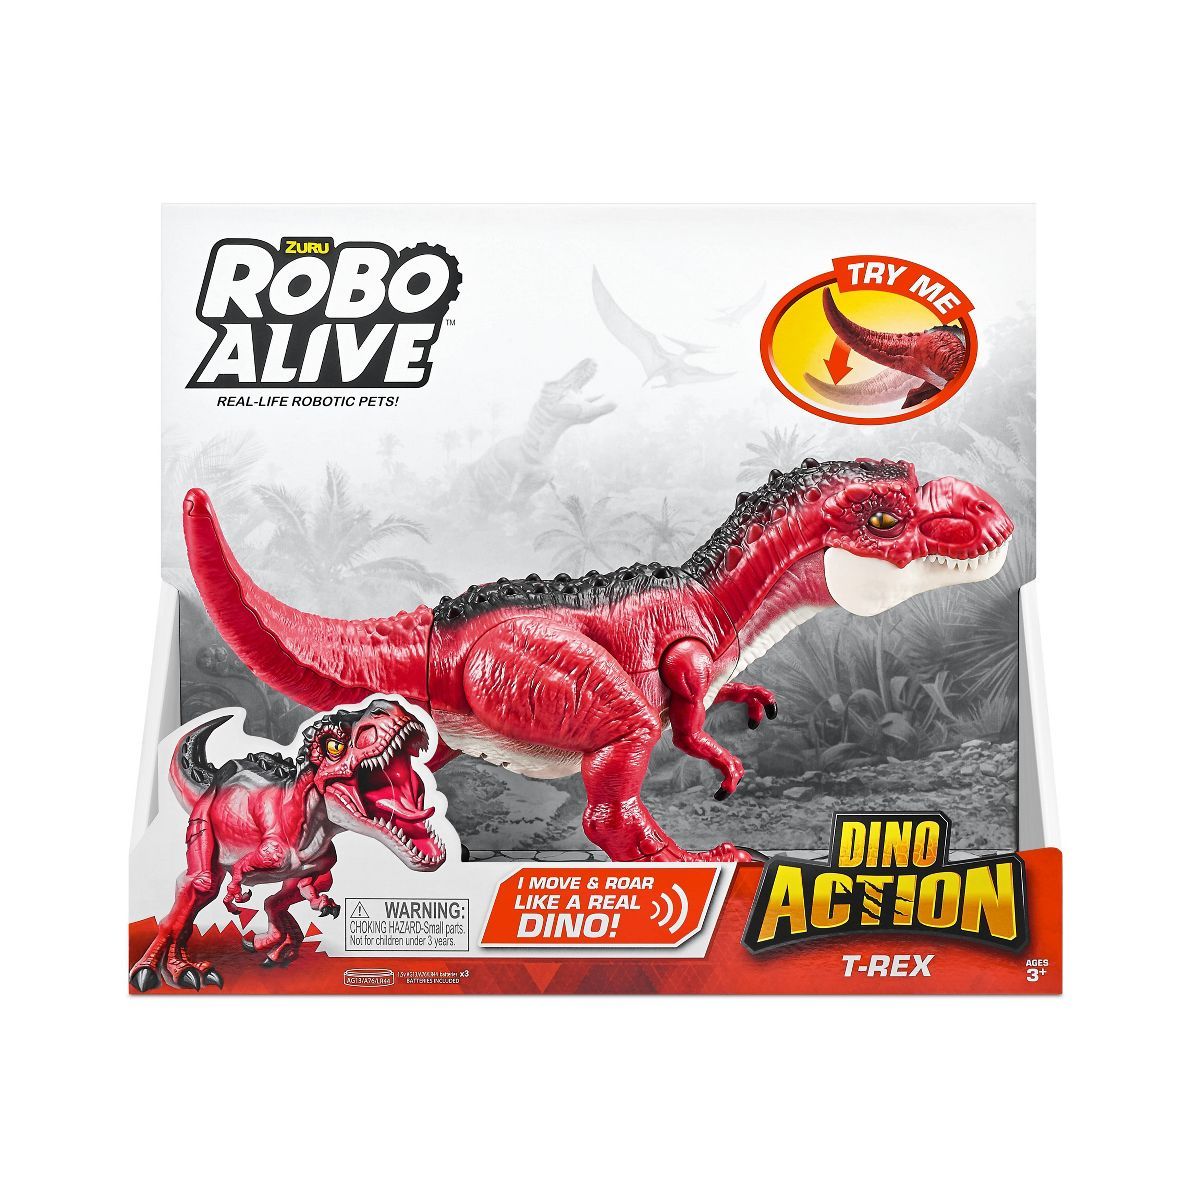 Robo Alive Dino Action T-Rex Robotic Dinosaur Toy by ZURU | Target